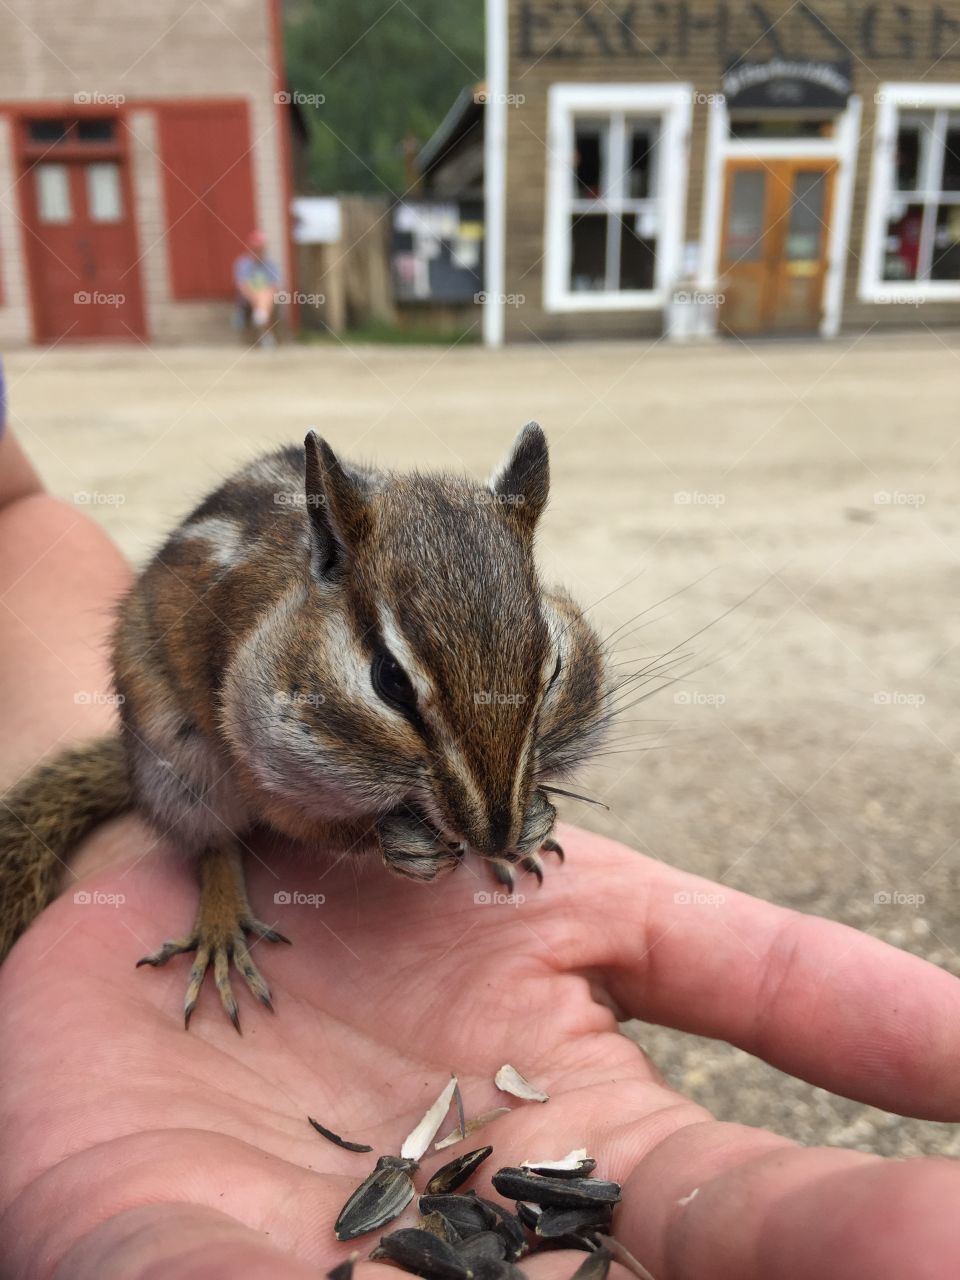 Chipmunk cheeks. Hand feeding the local vermin - very entertaining tourist trap